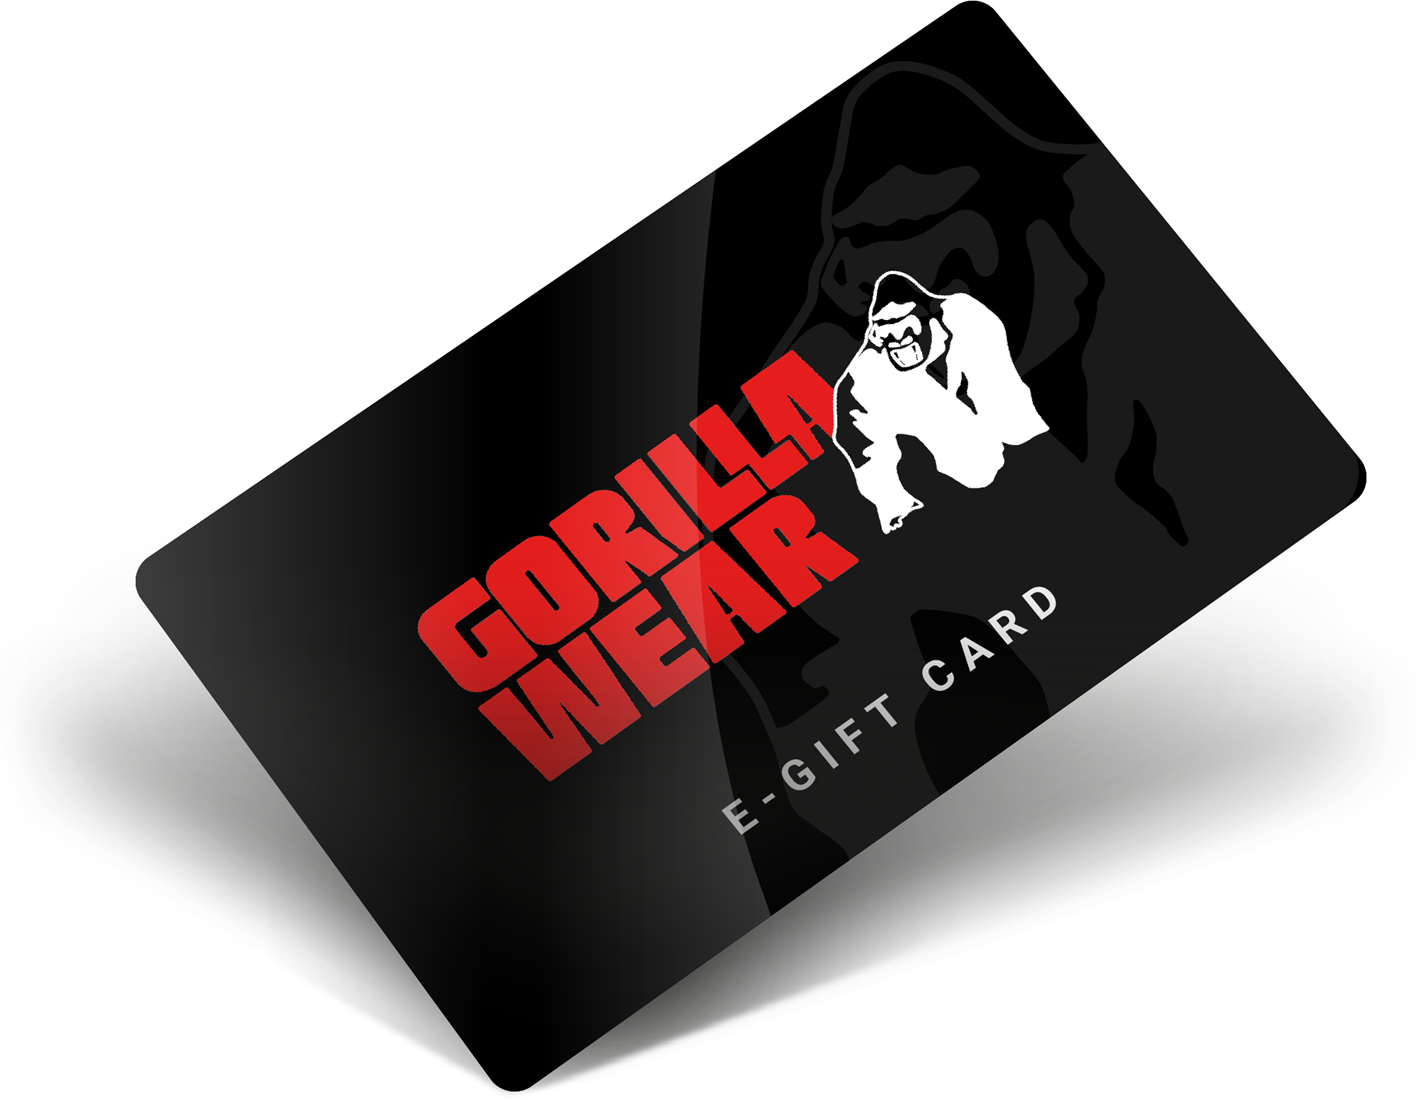 https://www.gorillawear.com/resize/giftcard_product-website-foto_3813763213027.png/0/1100/True/gorilla-wear-e-gift-card.png